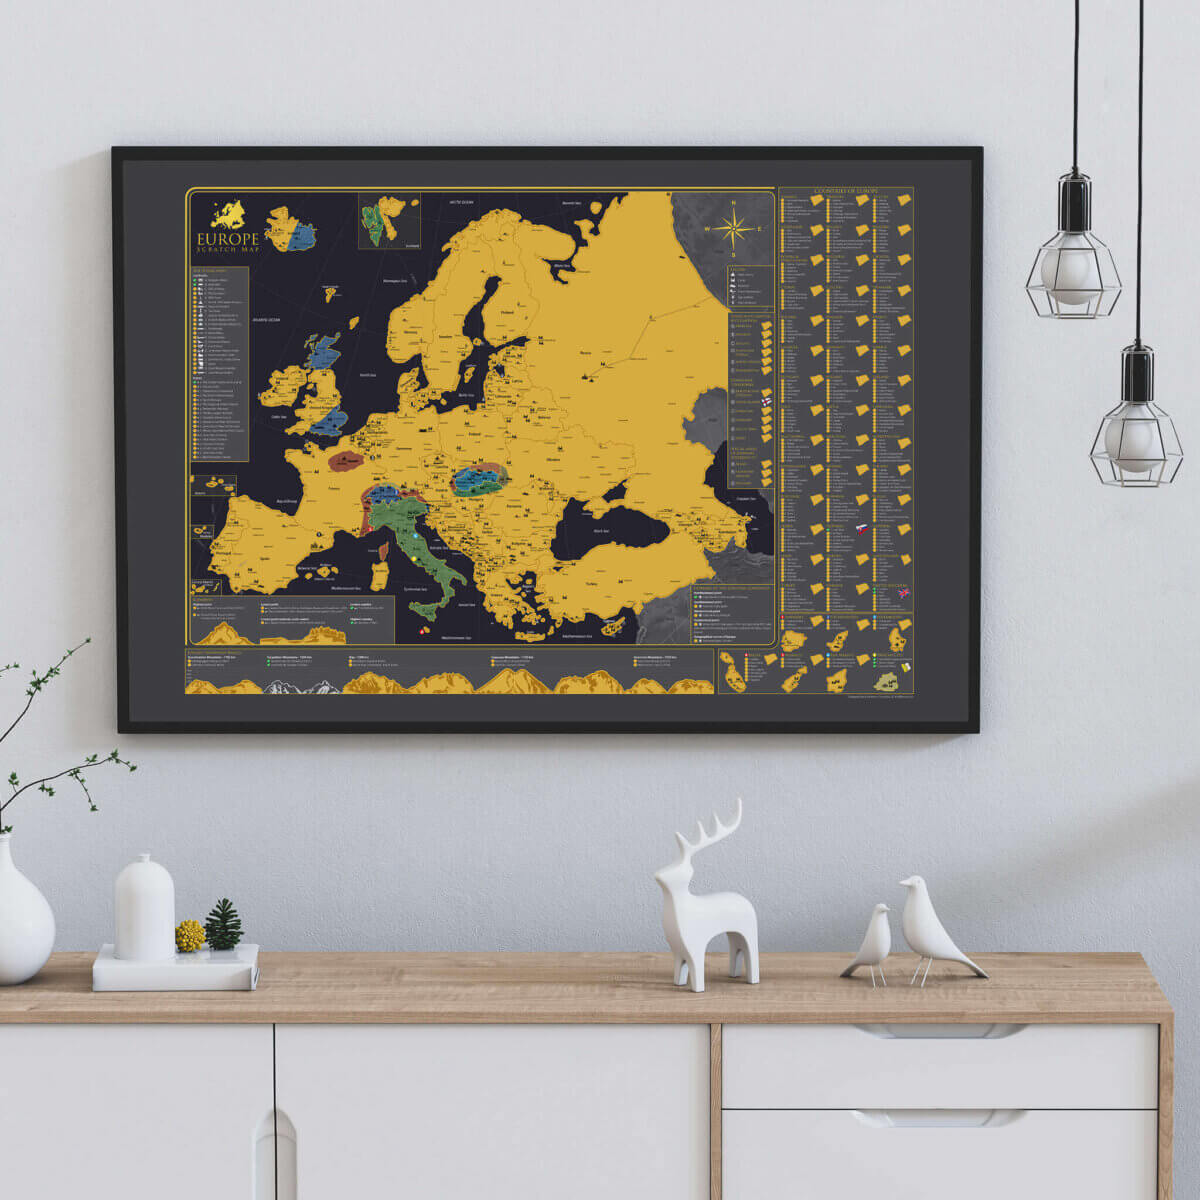 Rubbelkarte Europa - An einer Wand